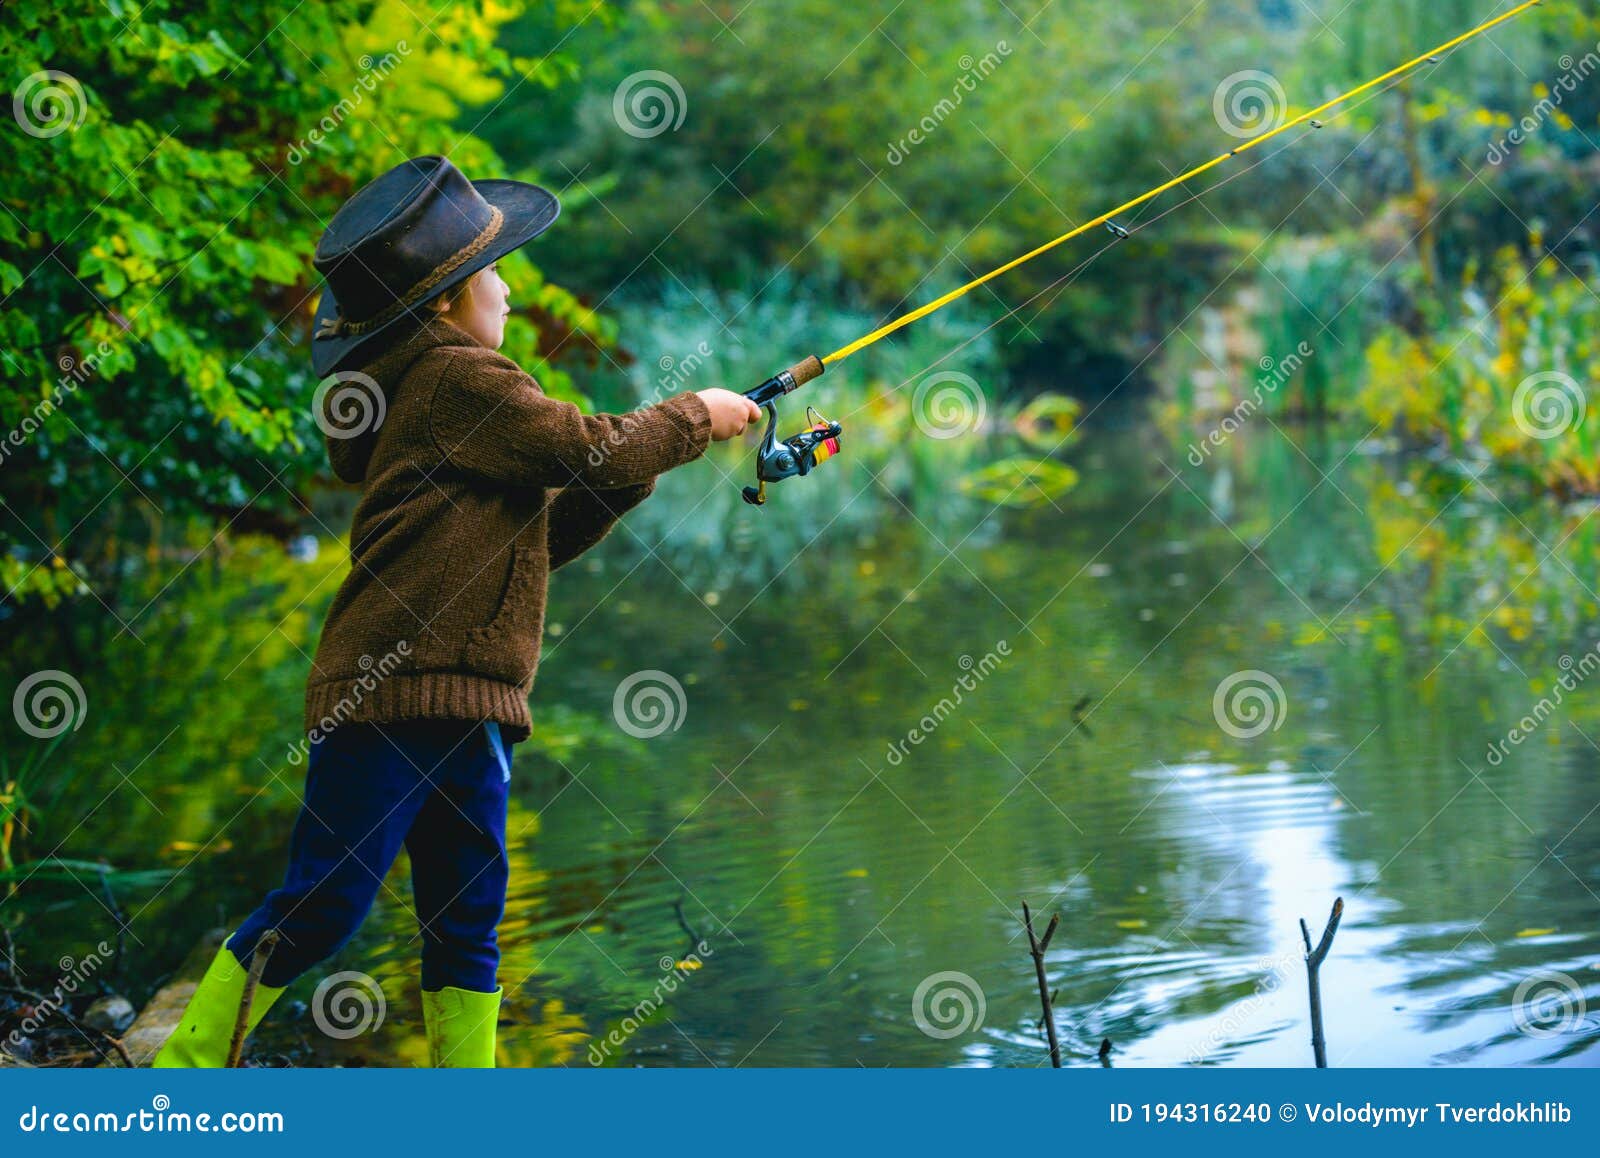 5,625 Fisherman Child Fish Stock Photos - Free & Royalty-Free